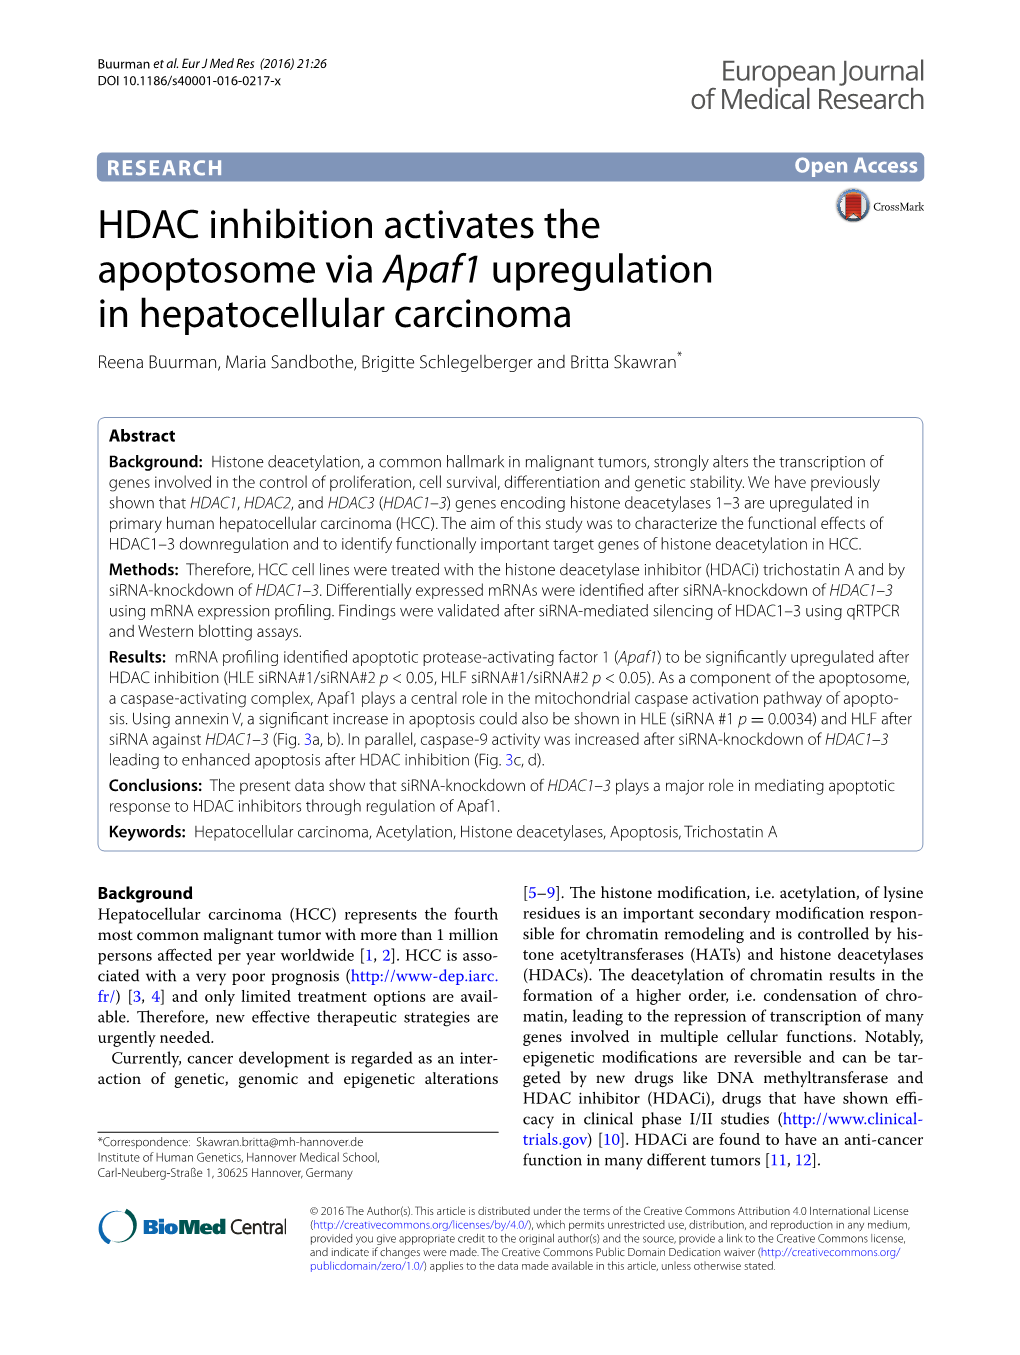 HDAC Inhibition Activates the Apoptosome Via Apaf1 Upregulation